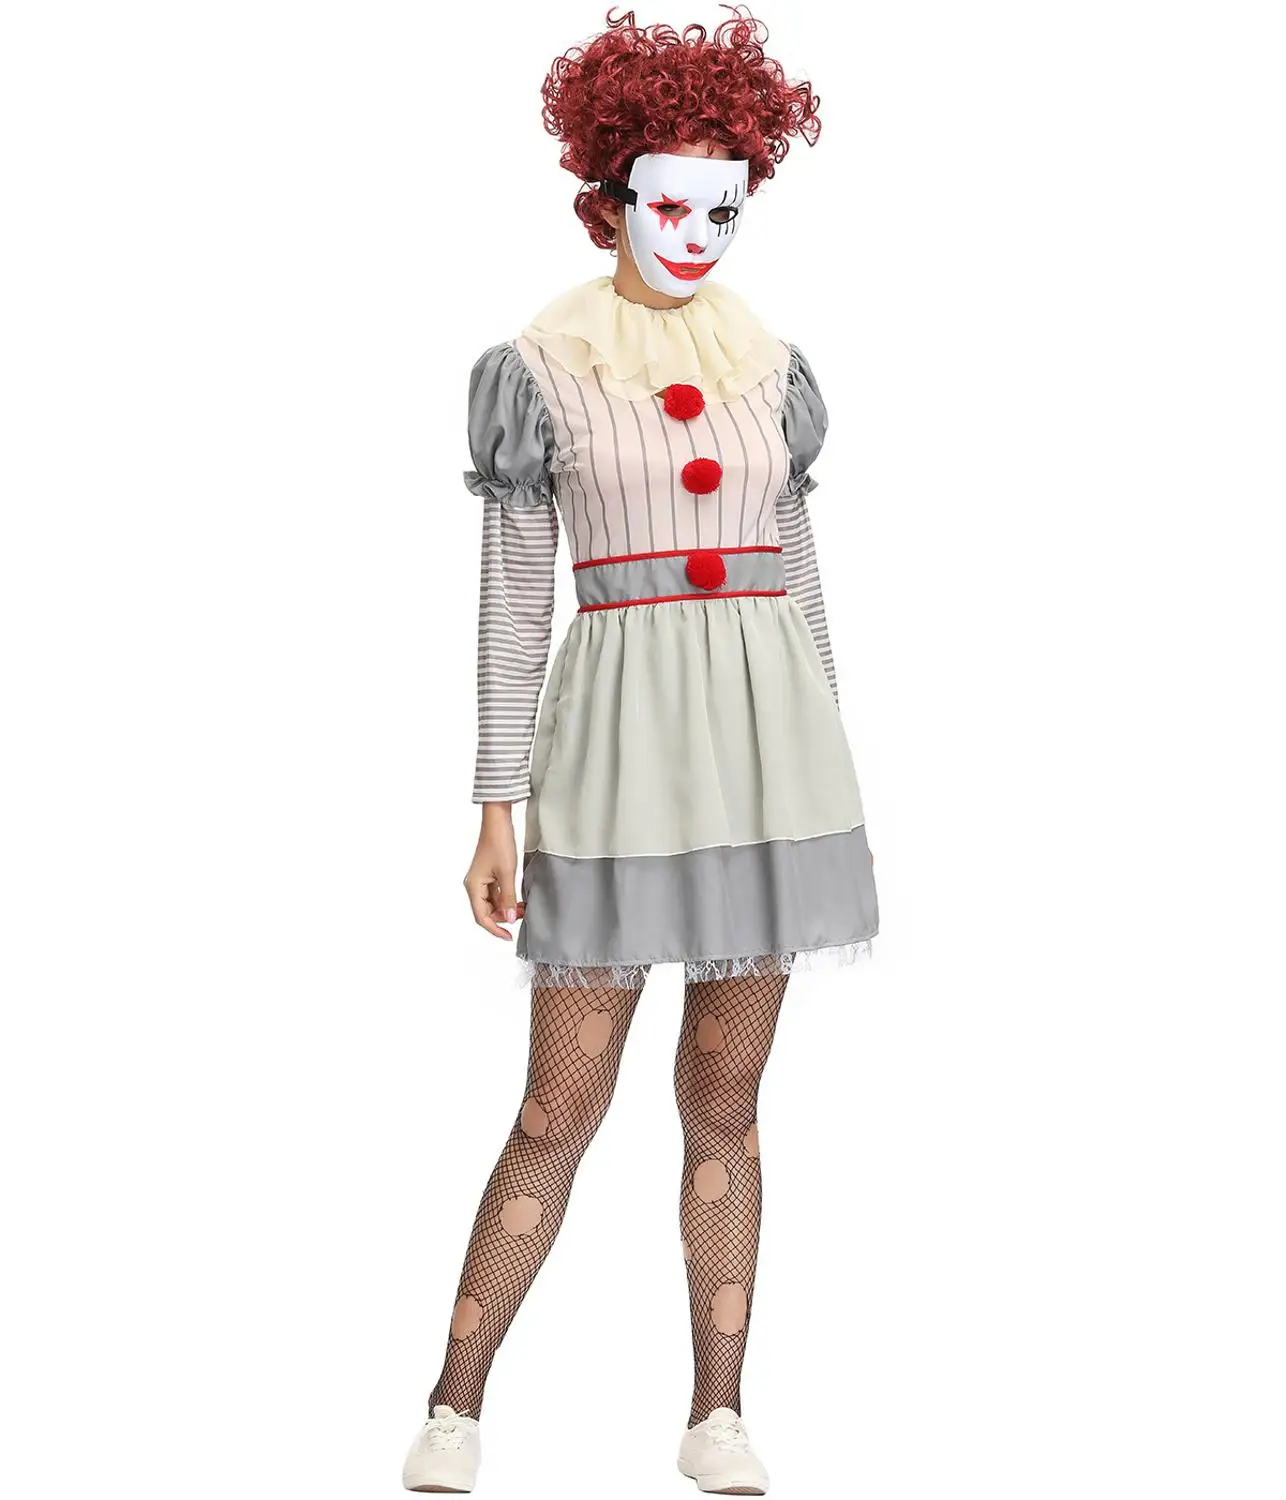 Стивен Кинг это клоун Pennywise костюм для взрослых мужчин и женщин убийца клоун Косплей нарядное платье комбинезон костюм для Хэллоуина